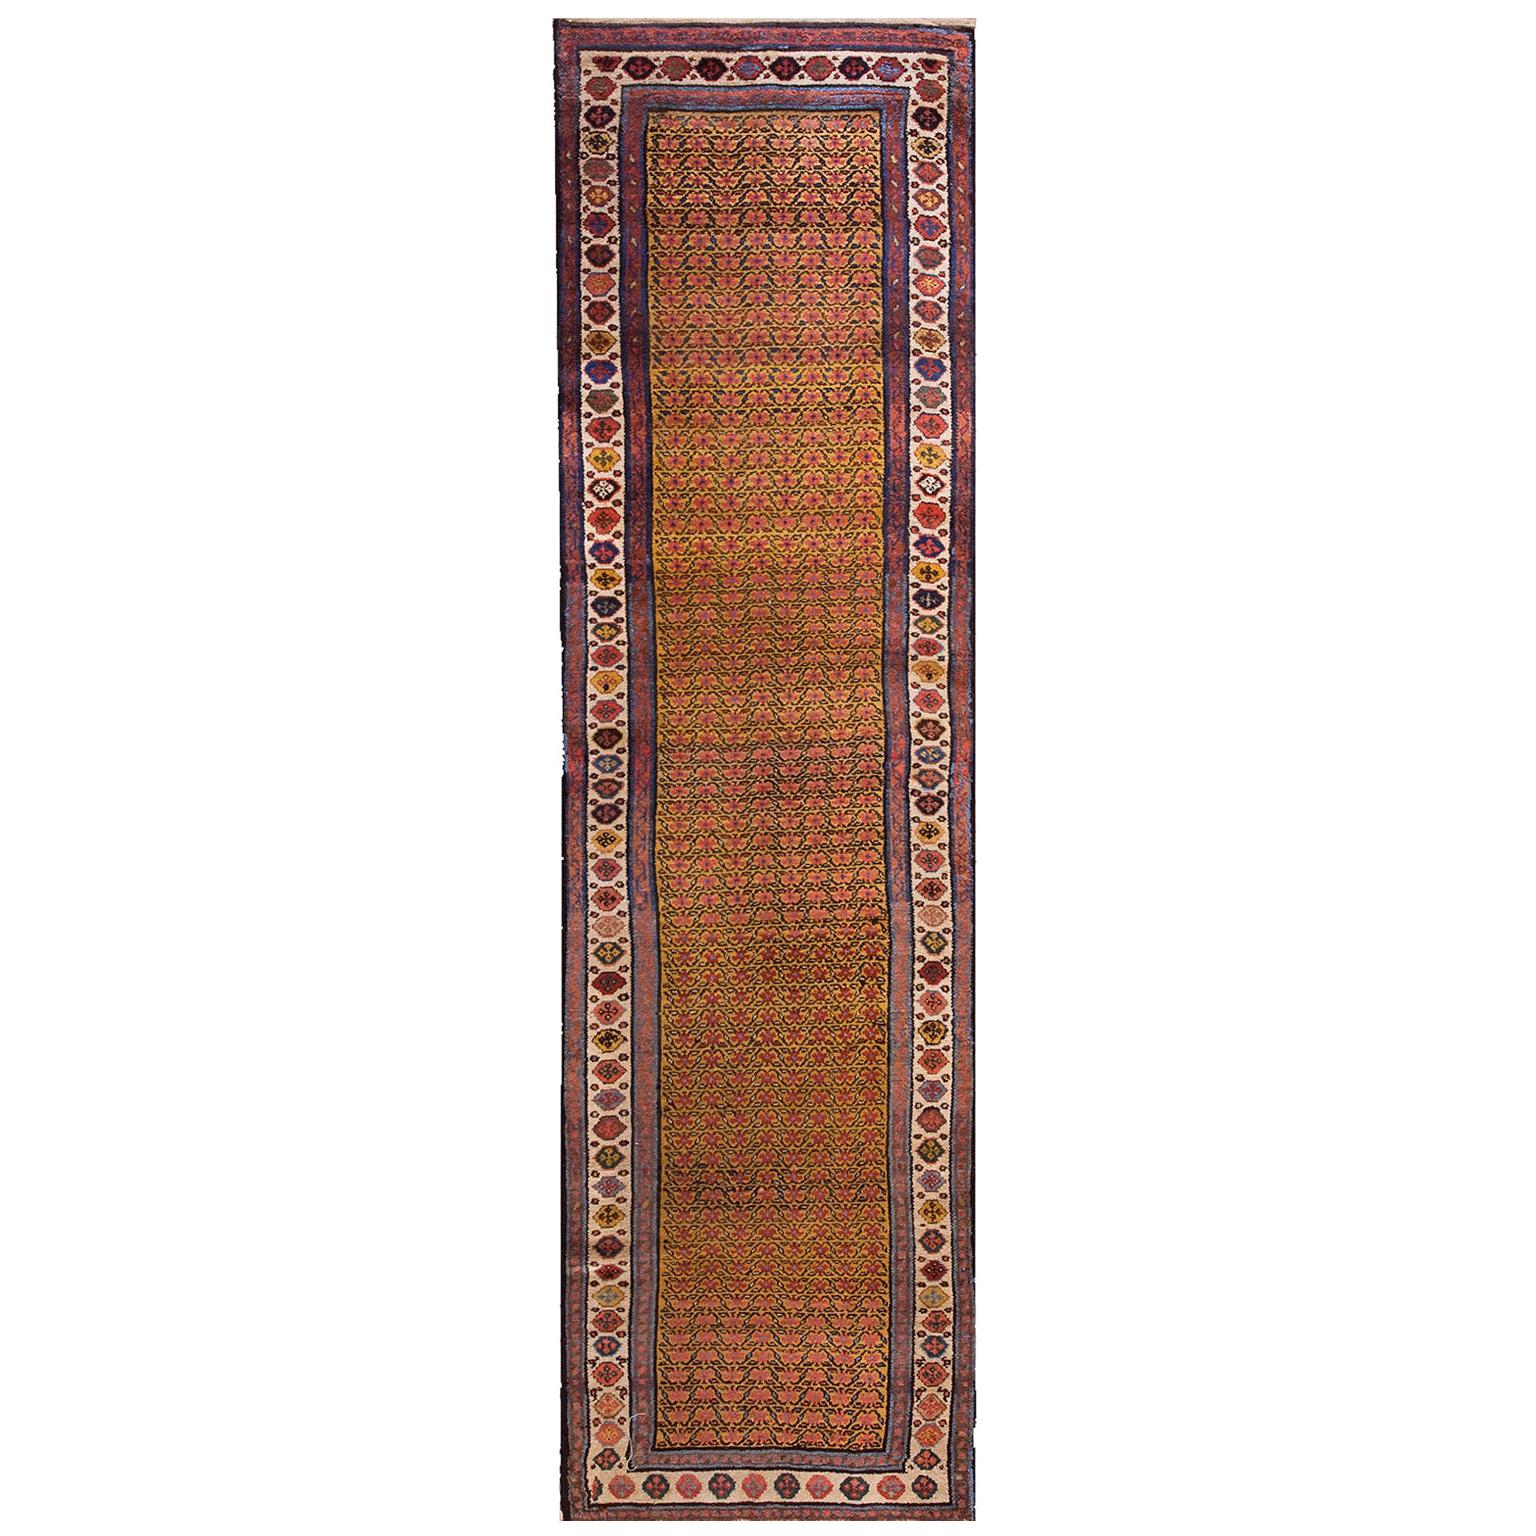 Late 19th Century N.W. Persian Carpet ( 3' x 11'7" - 91 x 353 )